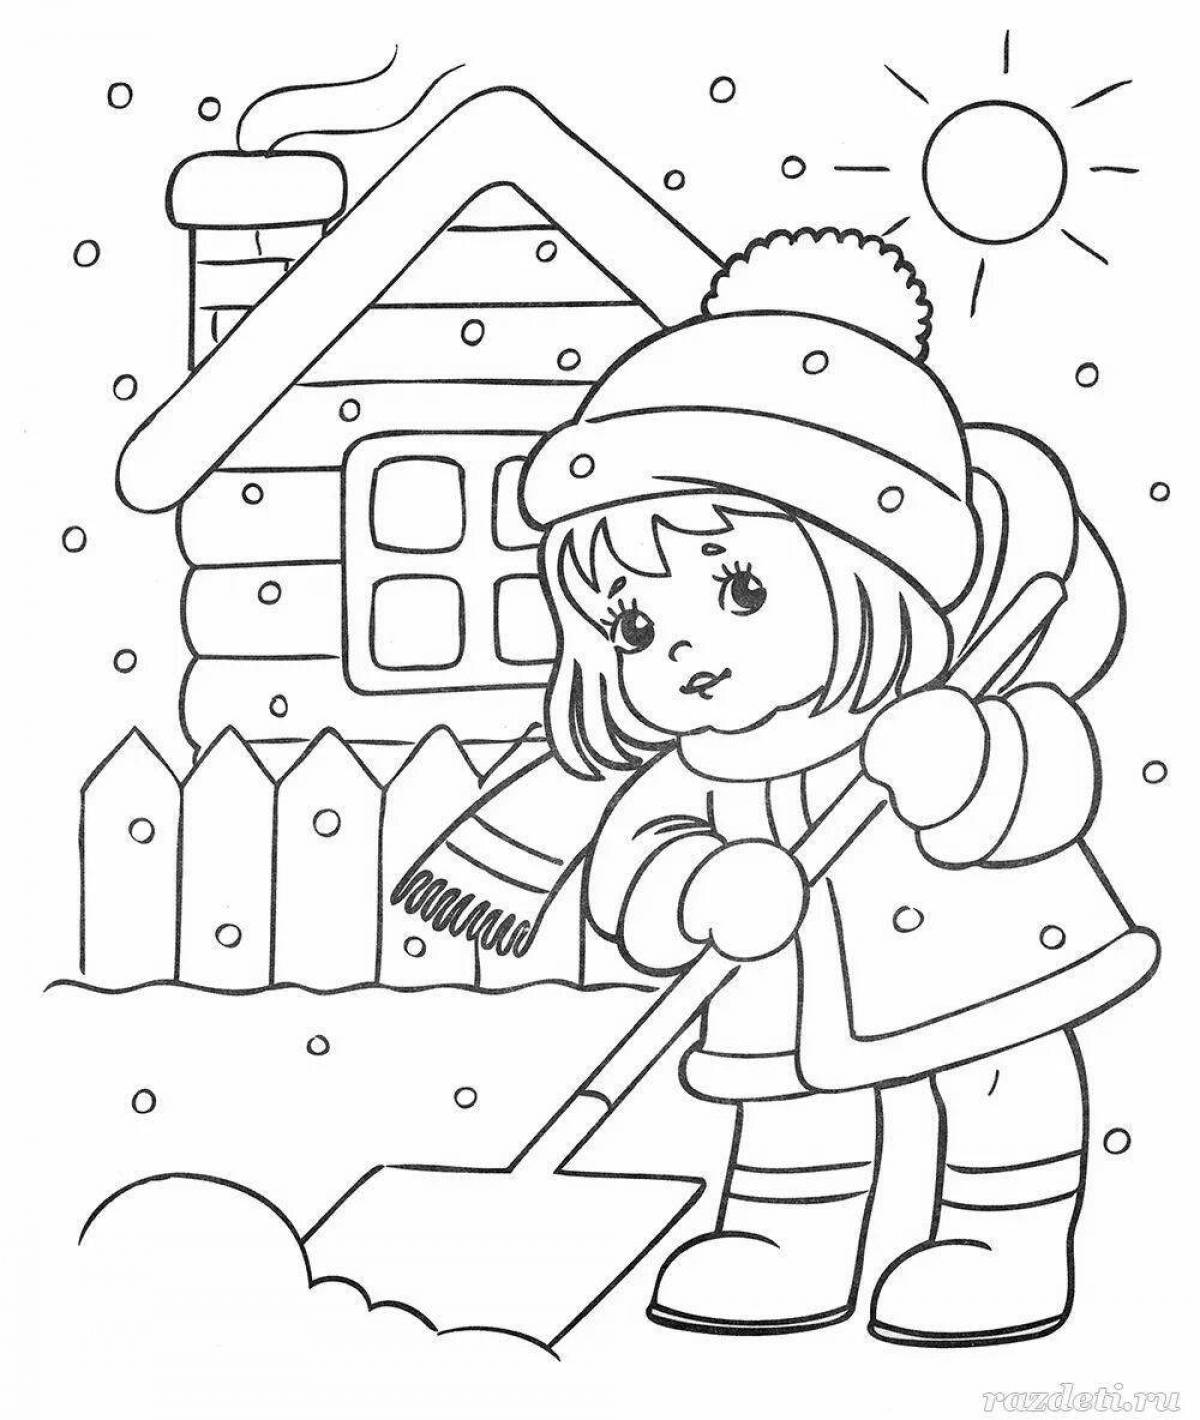 Радостная зимняя раскраска для малышей